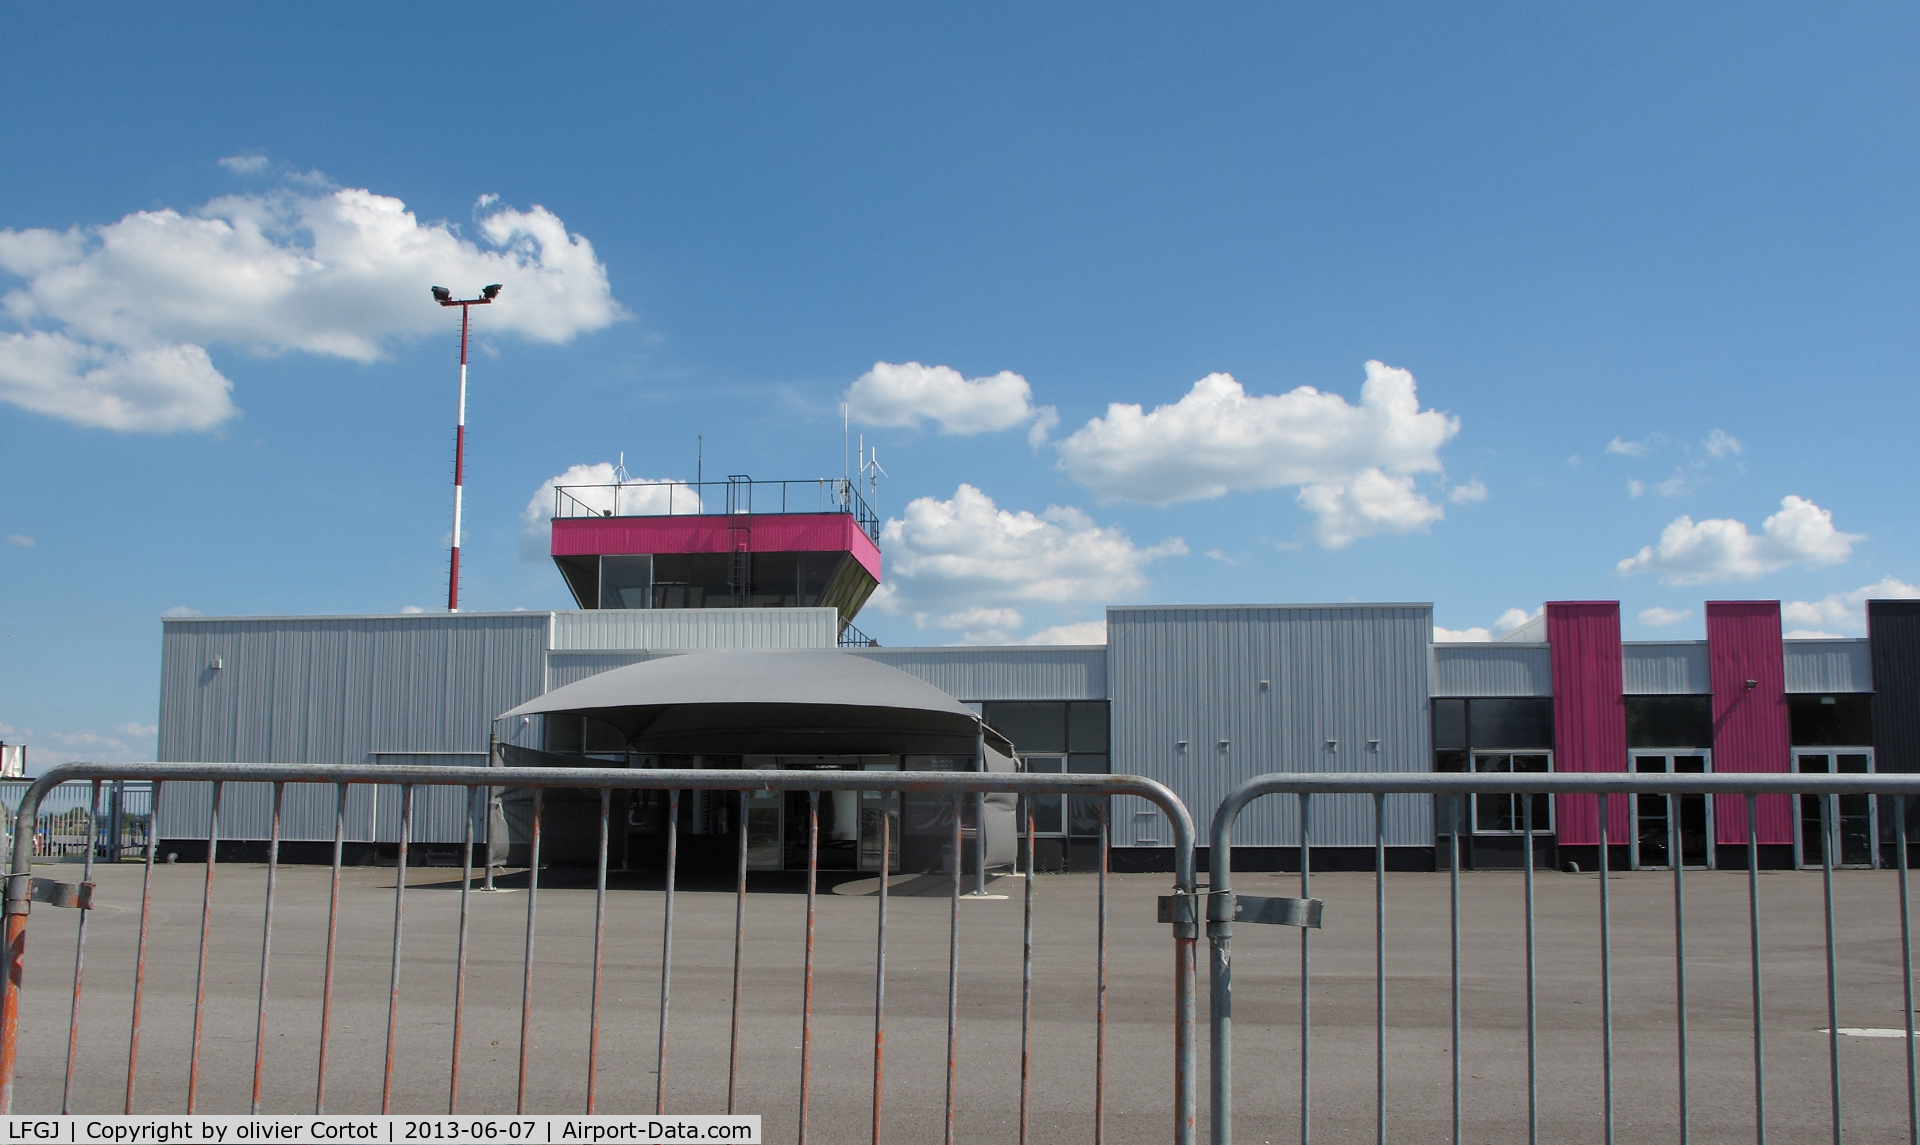 Dole Tavaux Airport, Dole France (LFGJ) - the control tower